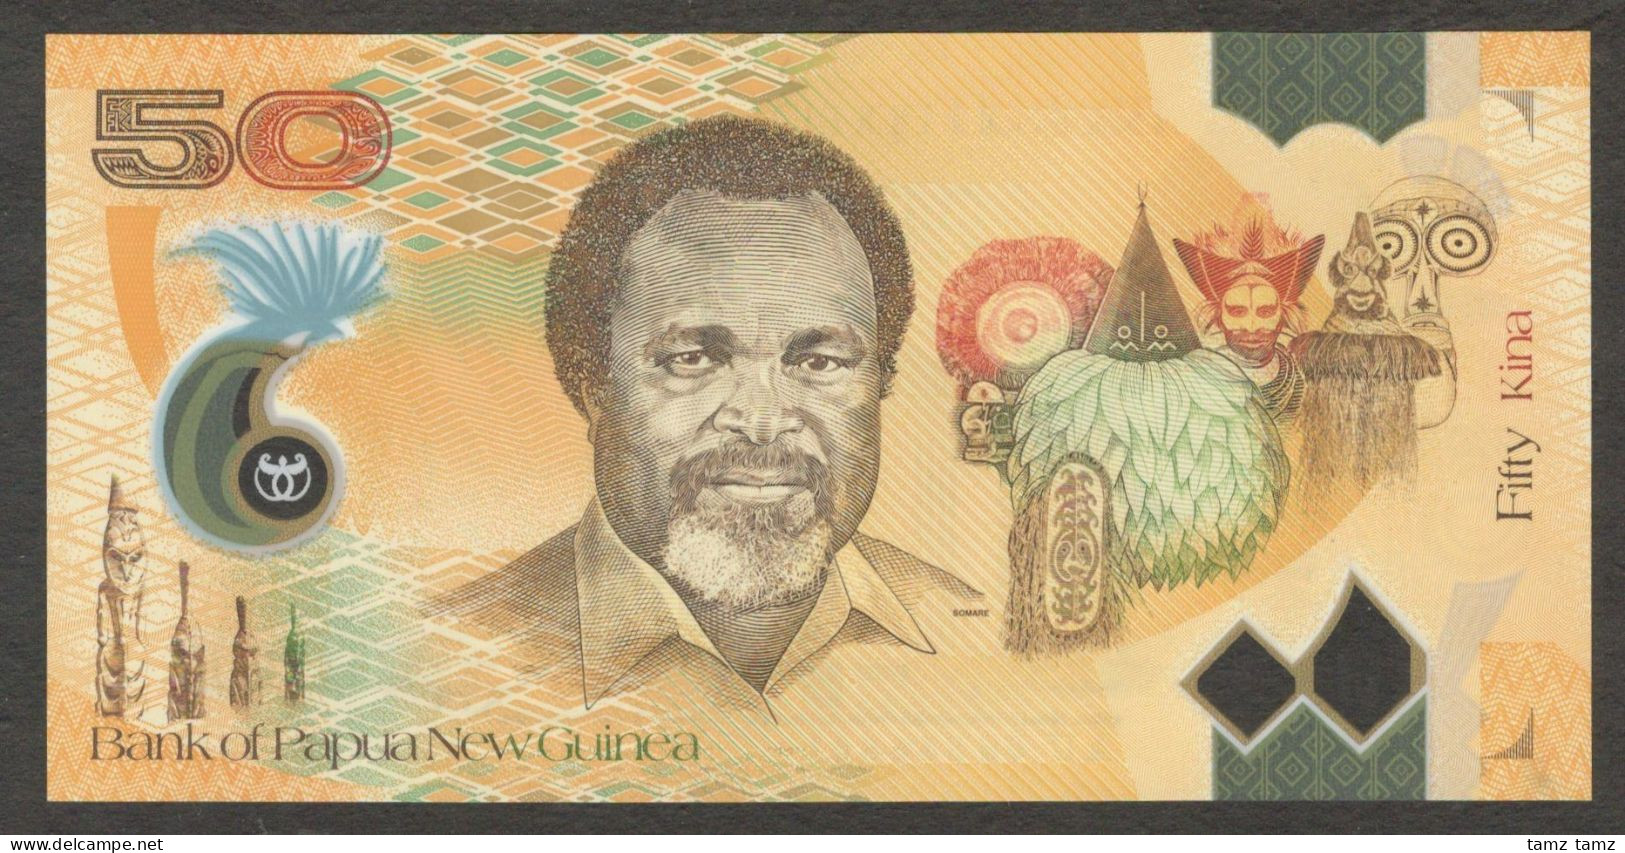 Papua New Guinea 50 Kina 2008 Polymer UNC Beautiful Banknotes - Papua New Guinea